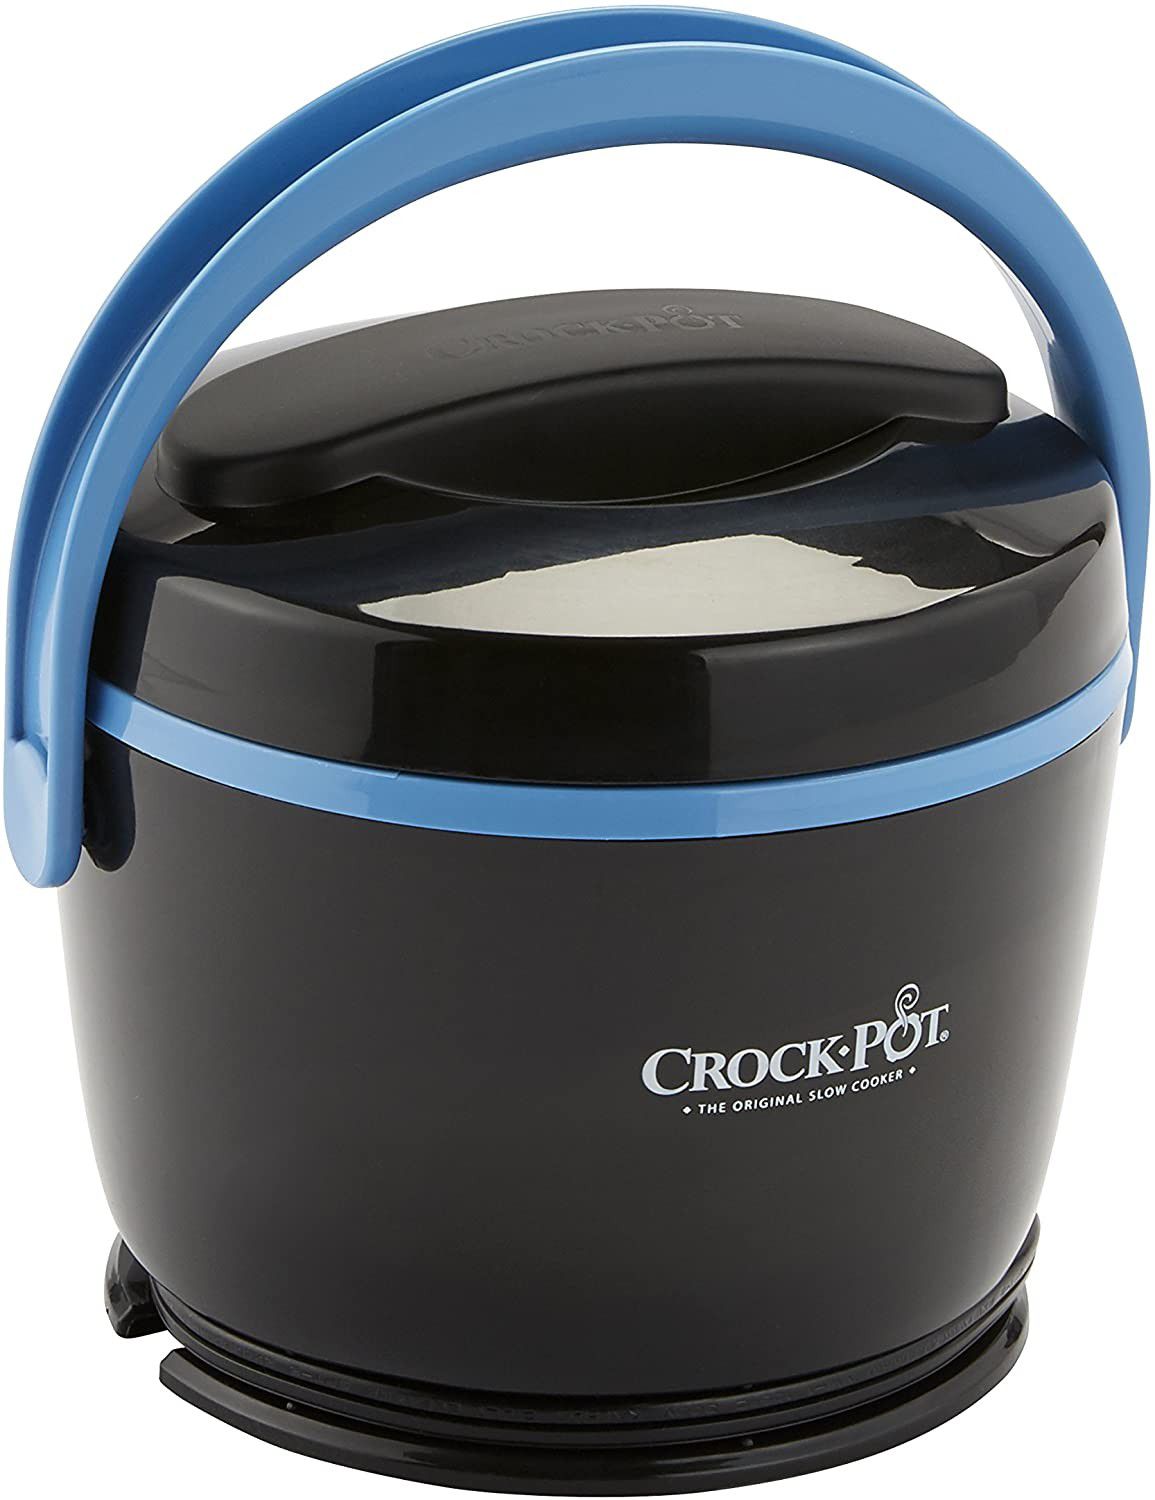 20oz Crock-Pot Slow Cooker